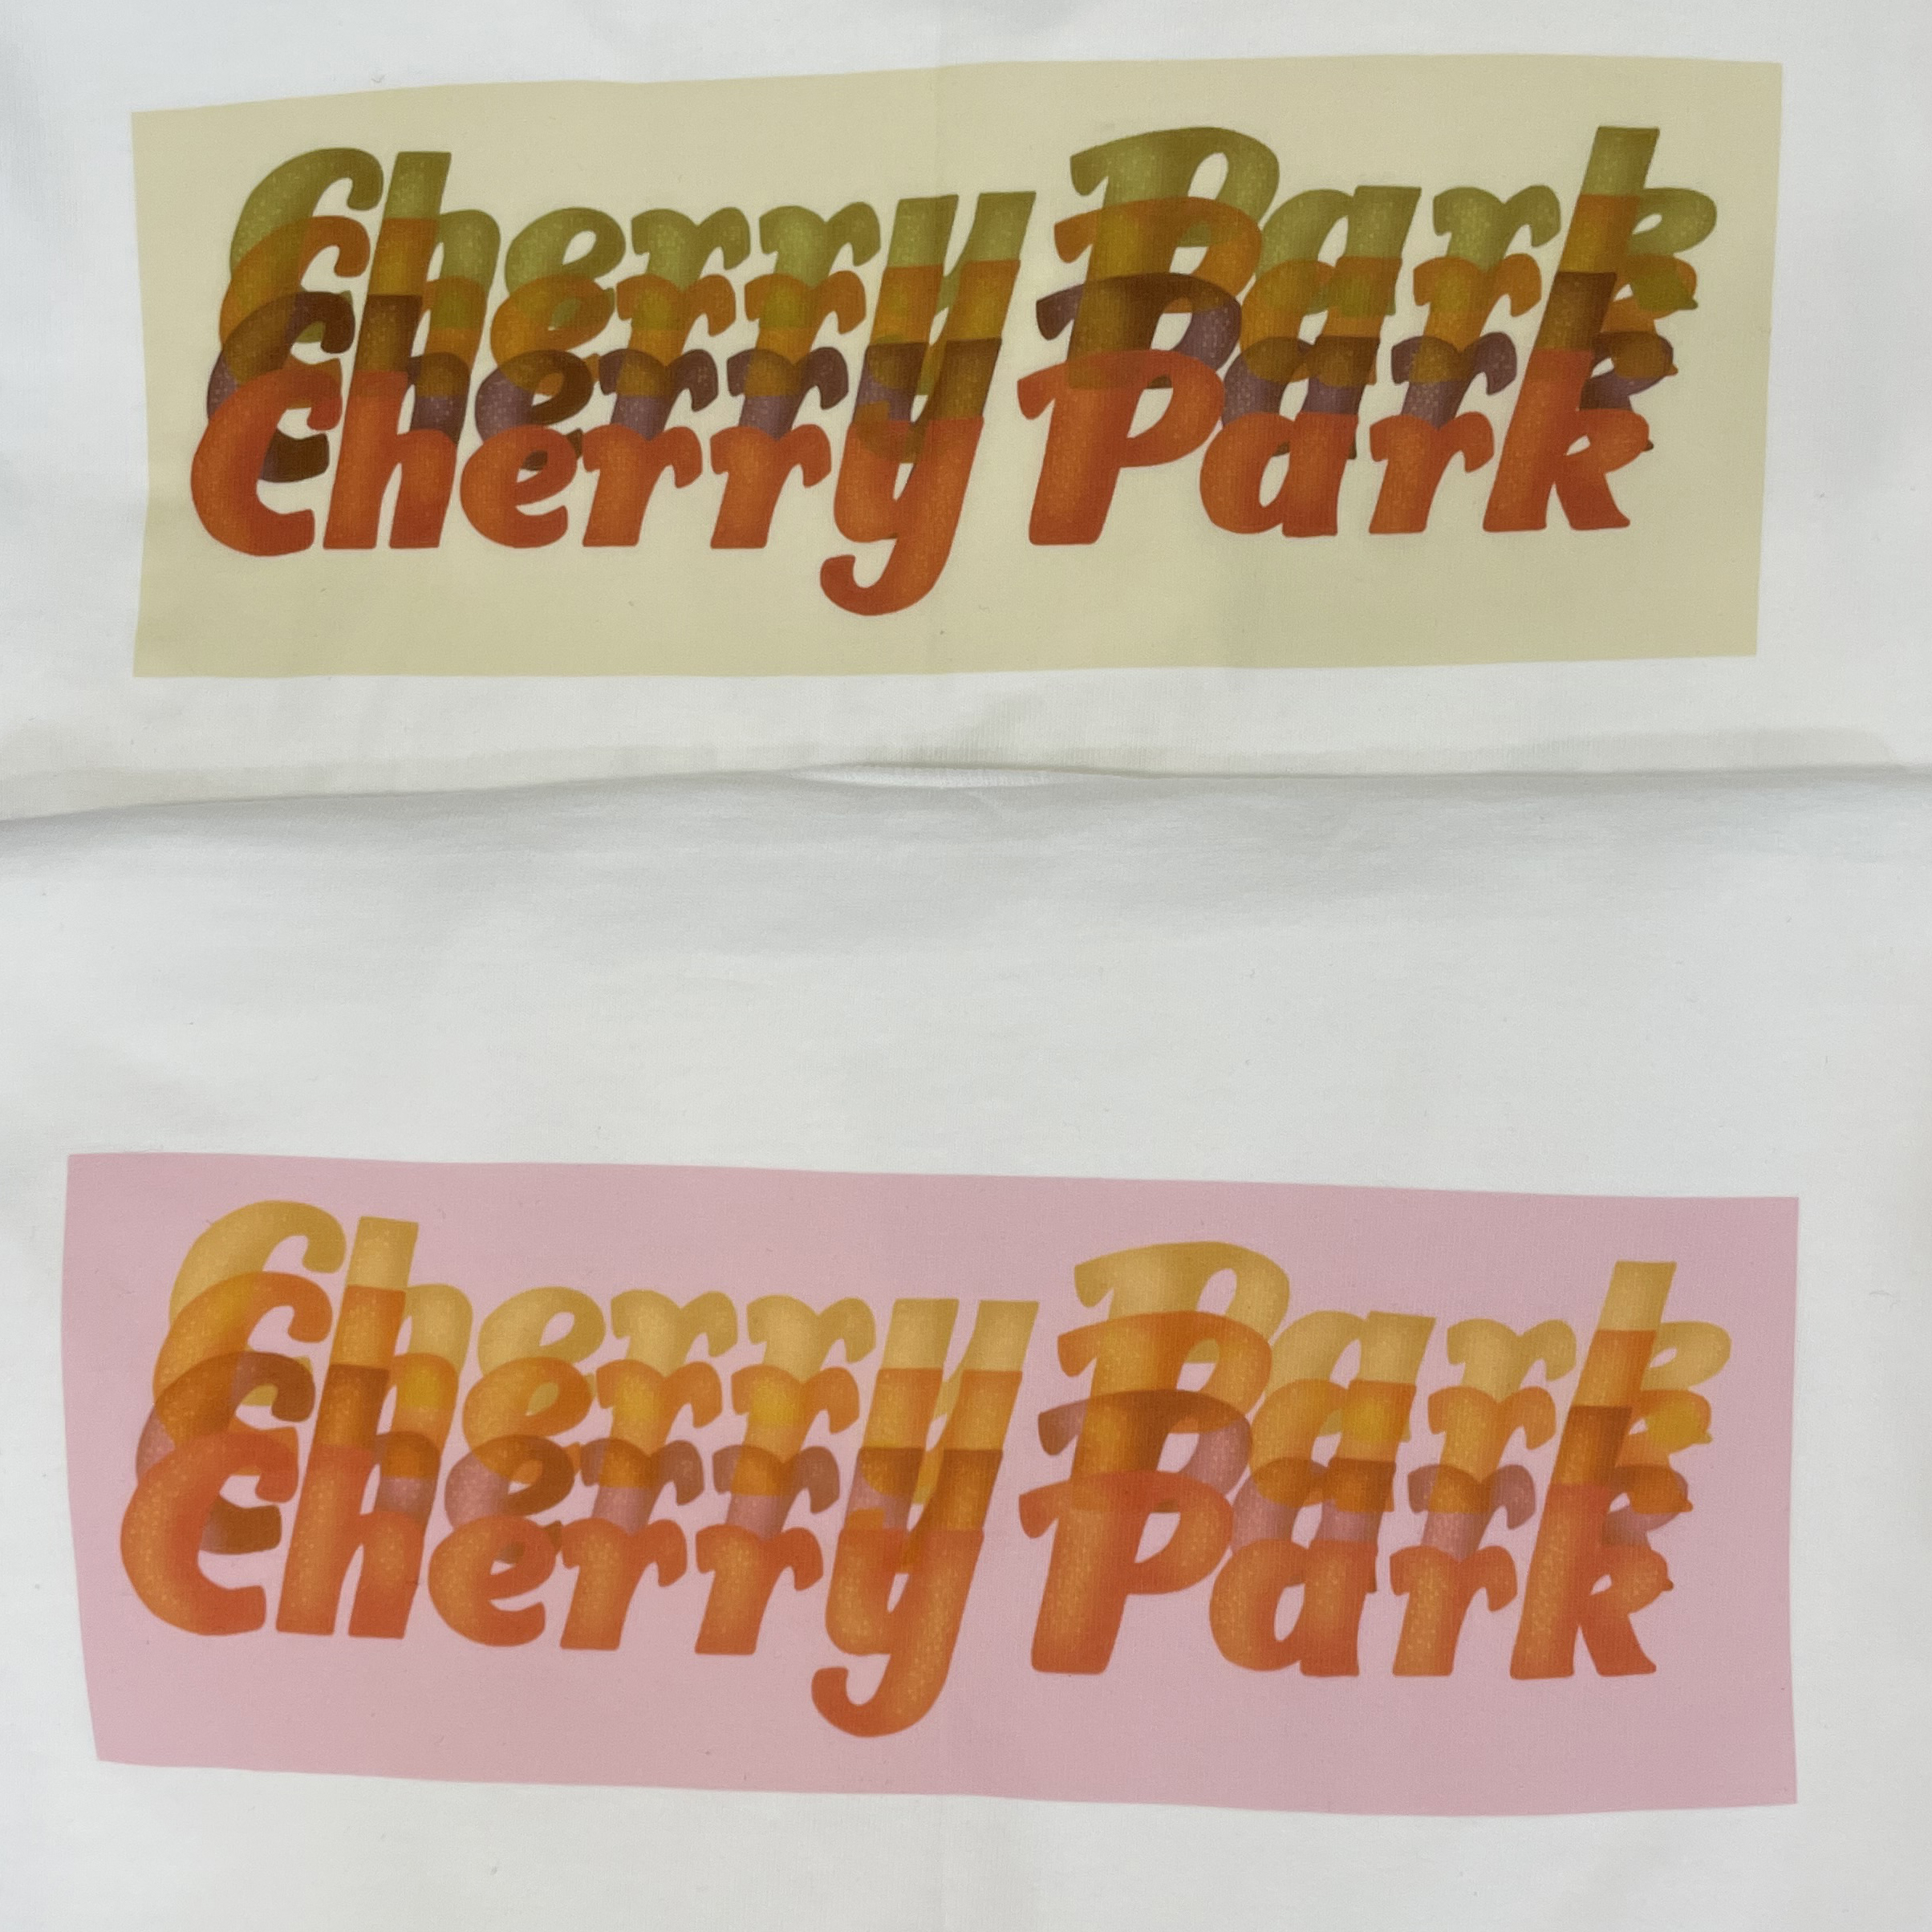 Cherry Park band's clothing merchandise style option: Cherry Park Text (Retro)